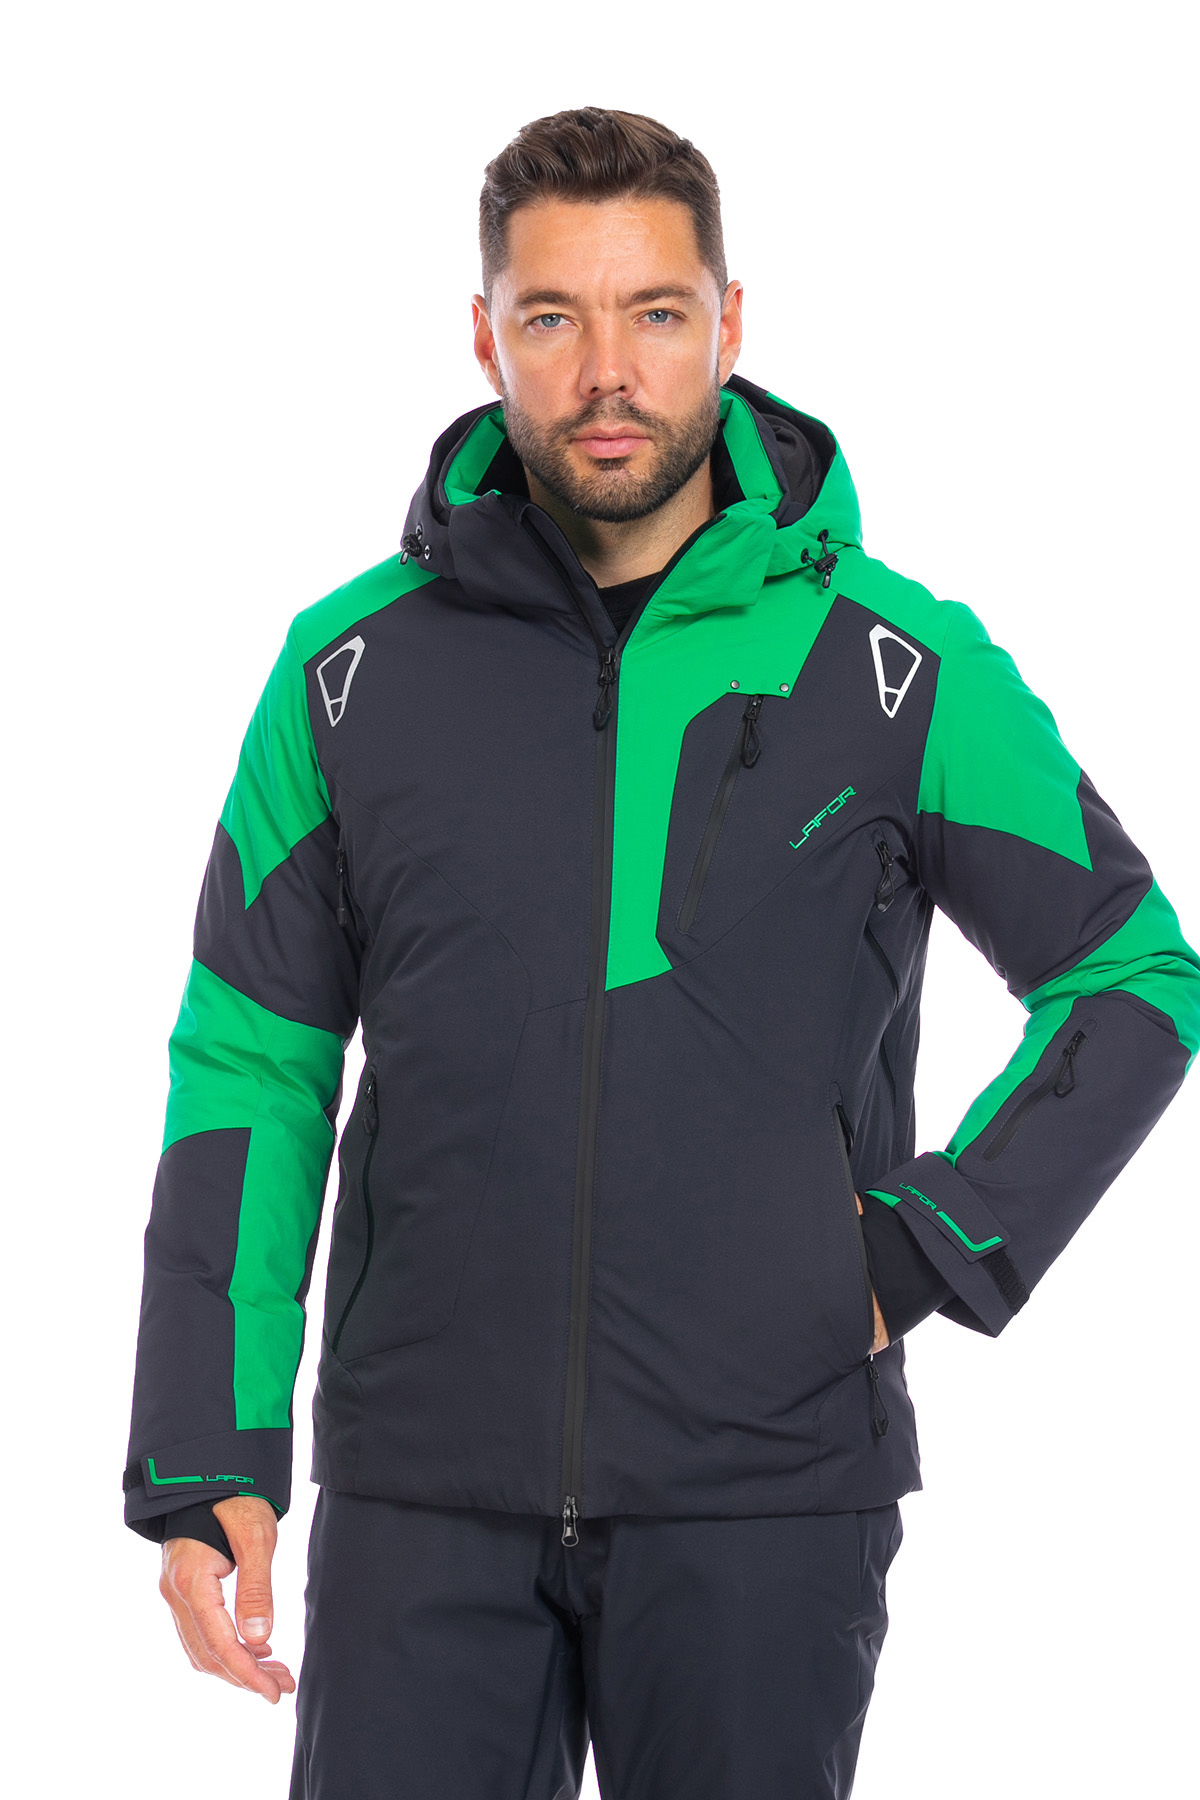 Мужская горнолыжная Куртка Lafor Зеленый, 767053 (56, 3xl)